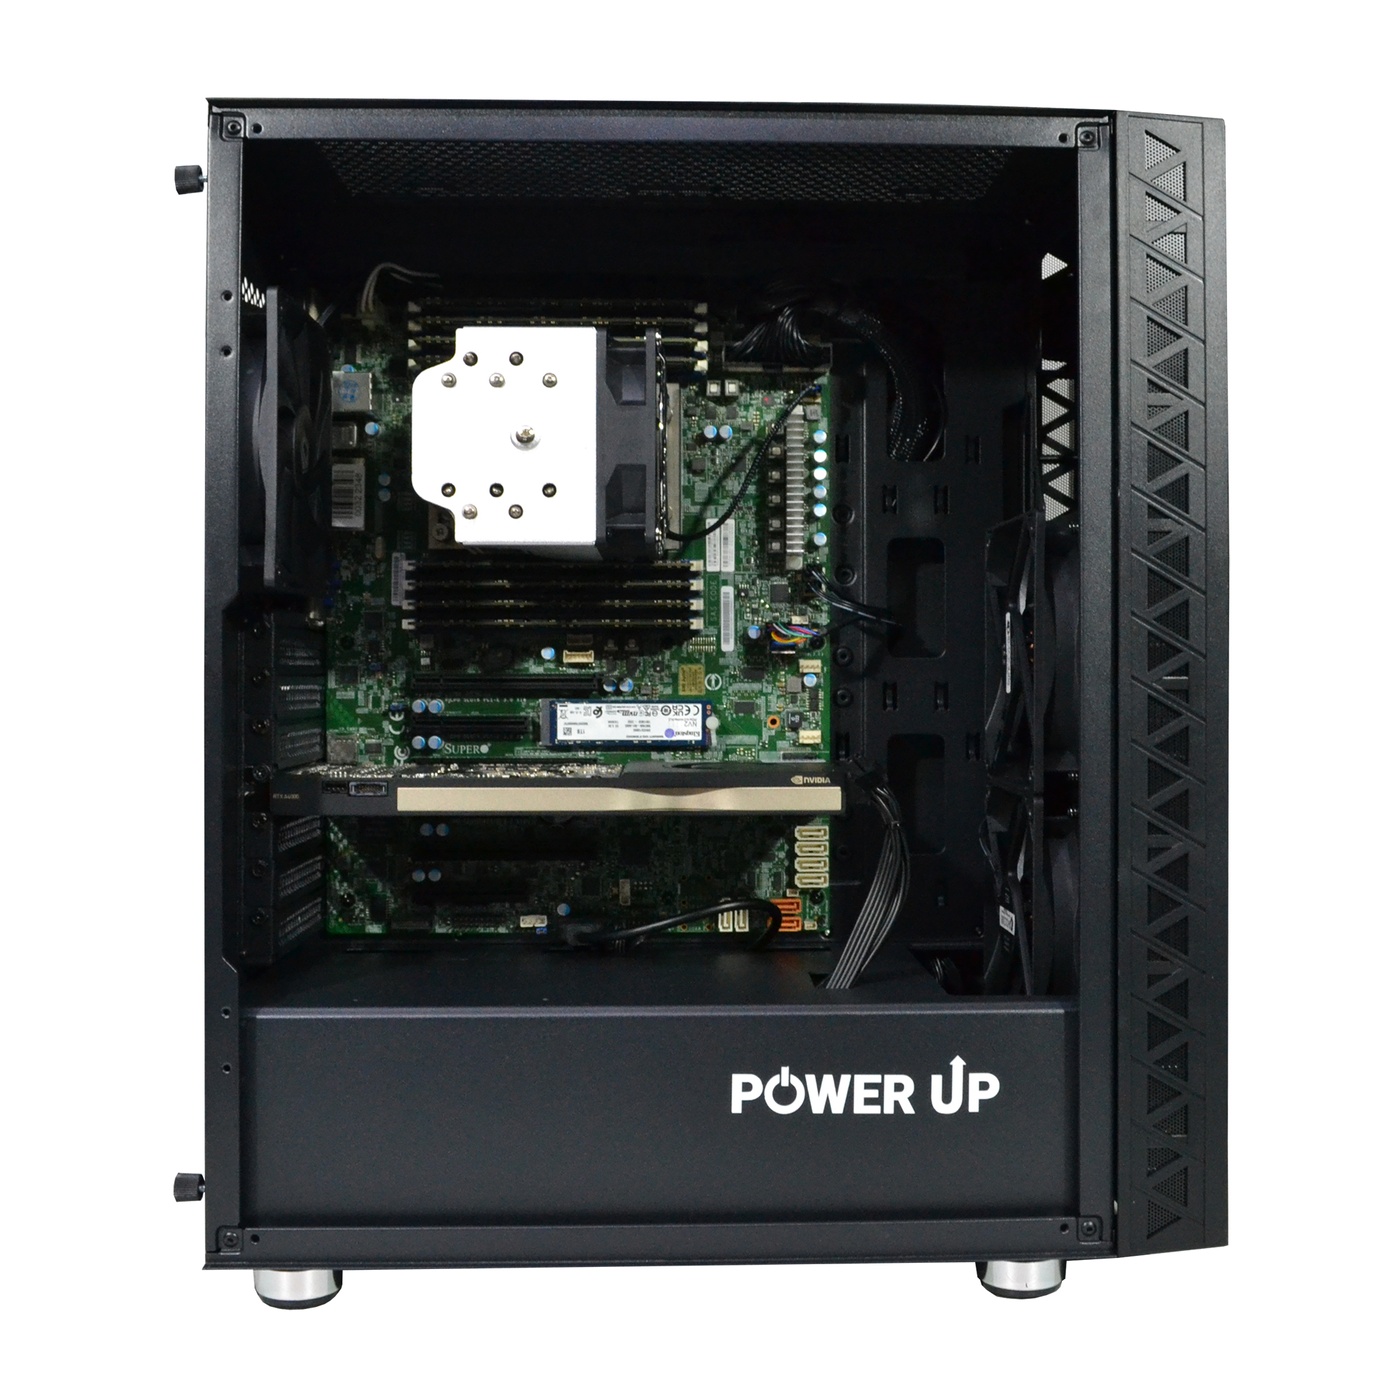 Рабочая станция PowerUp #258 AMD EPYC 7702 /128 GB/SSD 1TB/NVIDIA Quadro RTX A4000 16GB